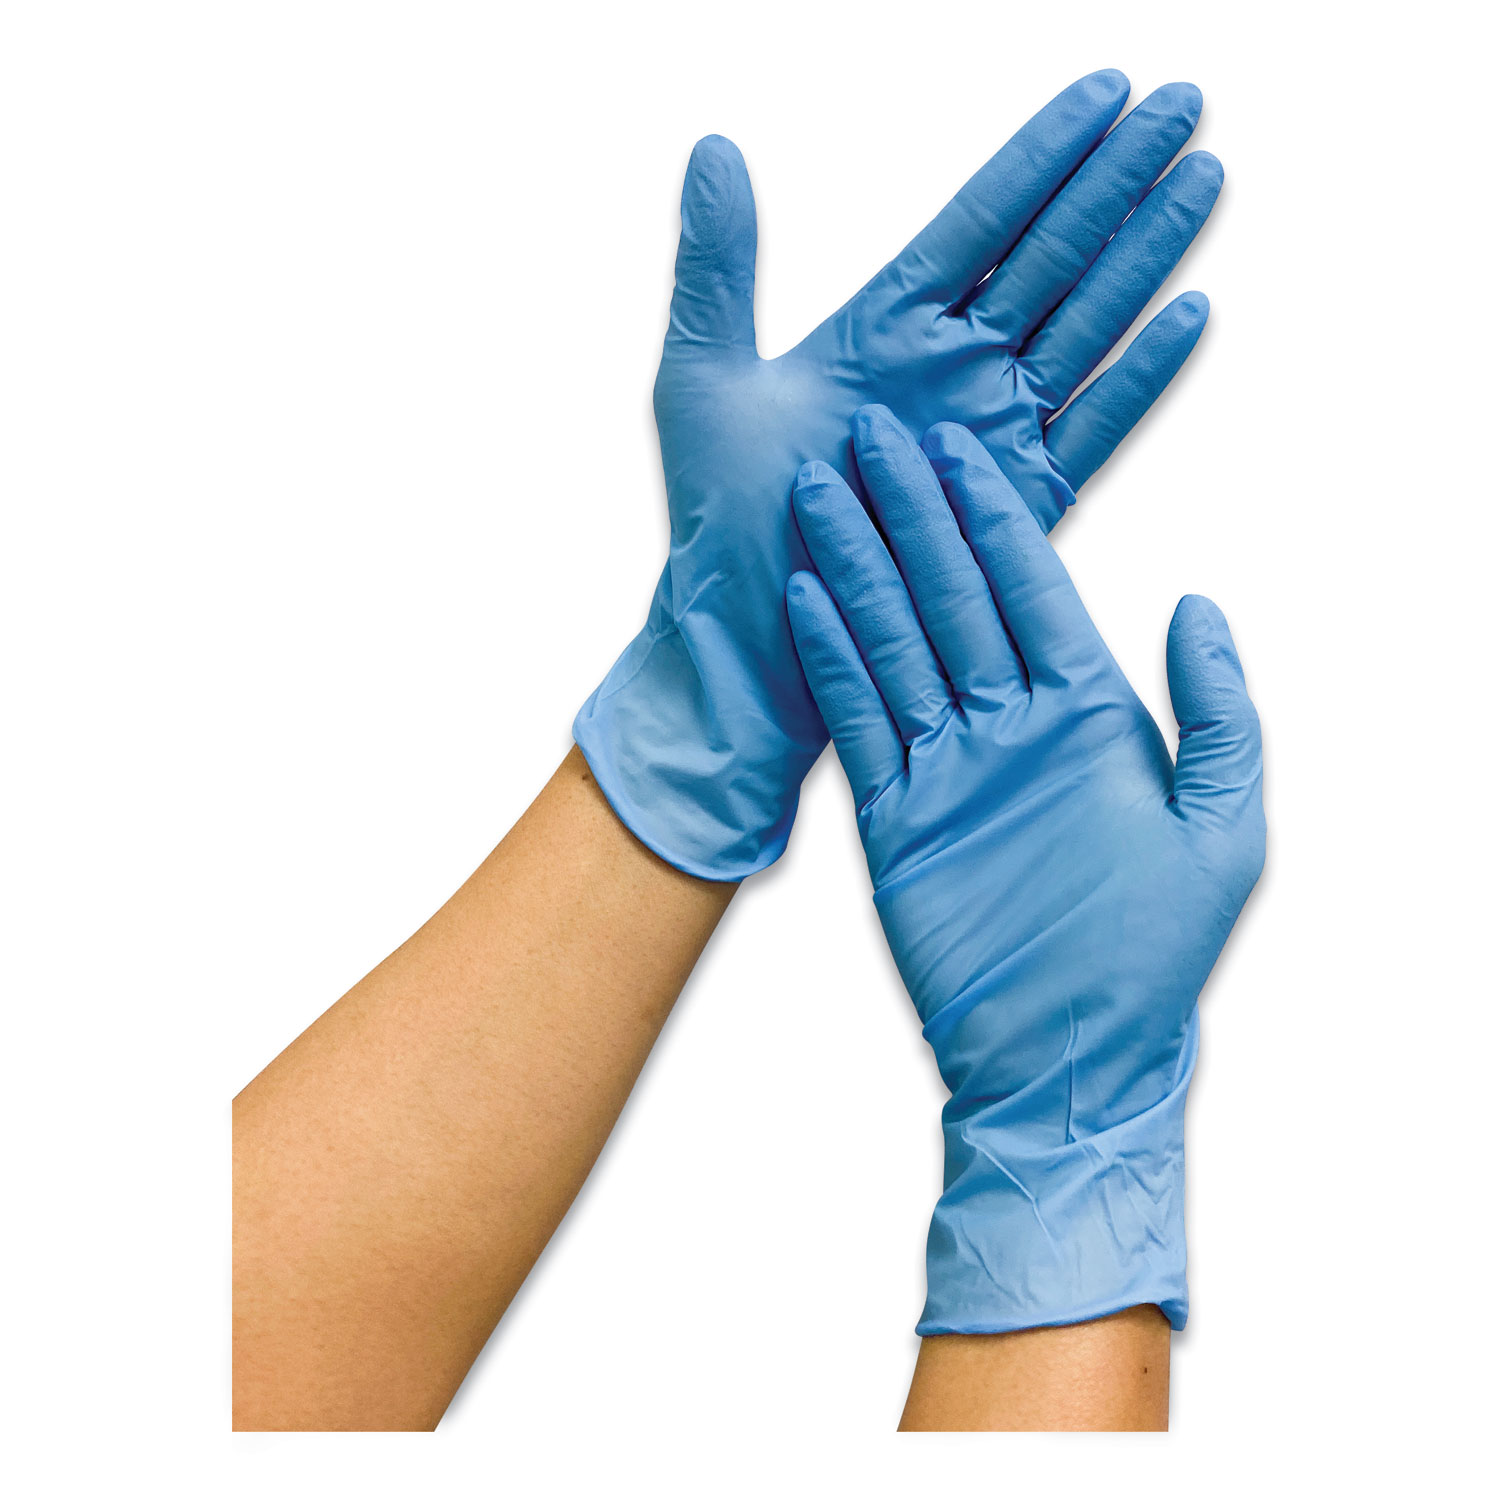  GN1 PE16920 Powder-Free Nitrile Gloves, Blue, X-Large, 1,000/Carton (GN1PE16920) 